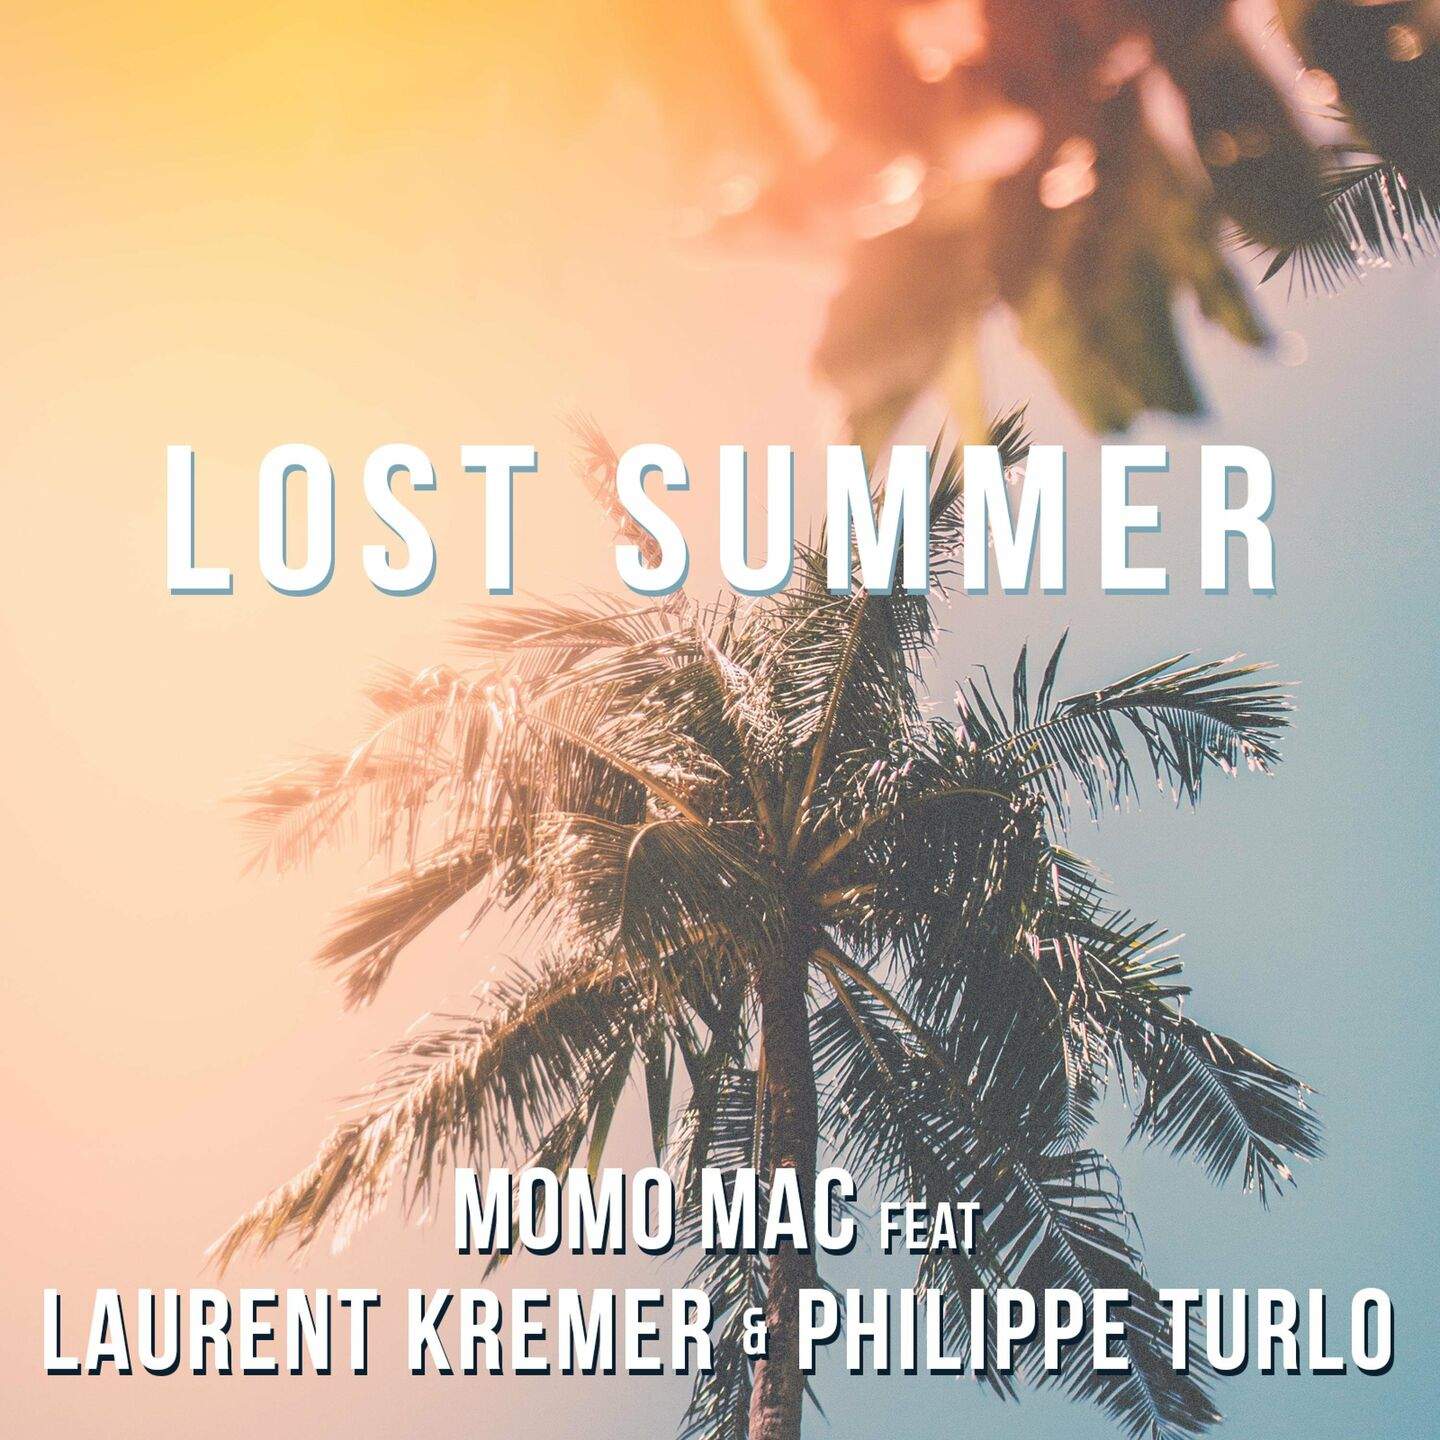 Lost Summer feat. Laurent Kremer & Philippe Turlo -
                    Luxe radio